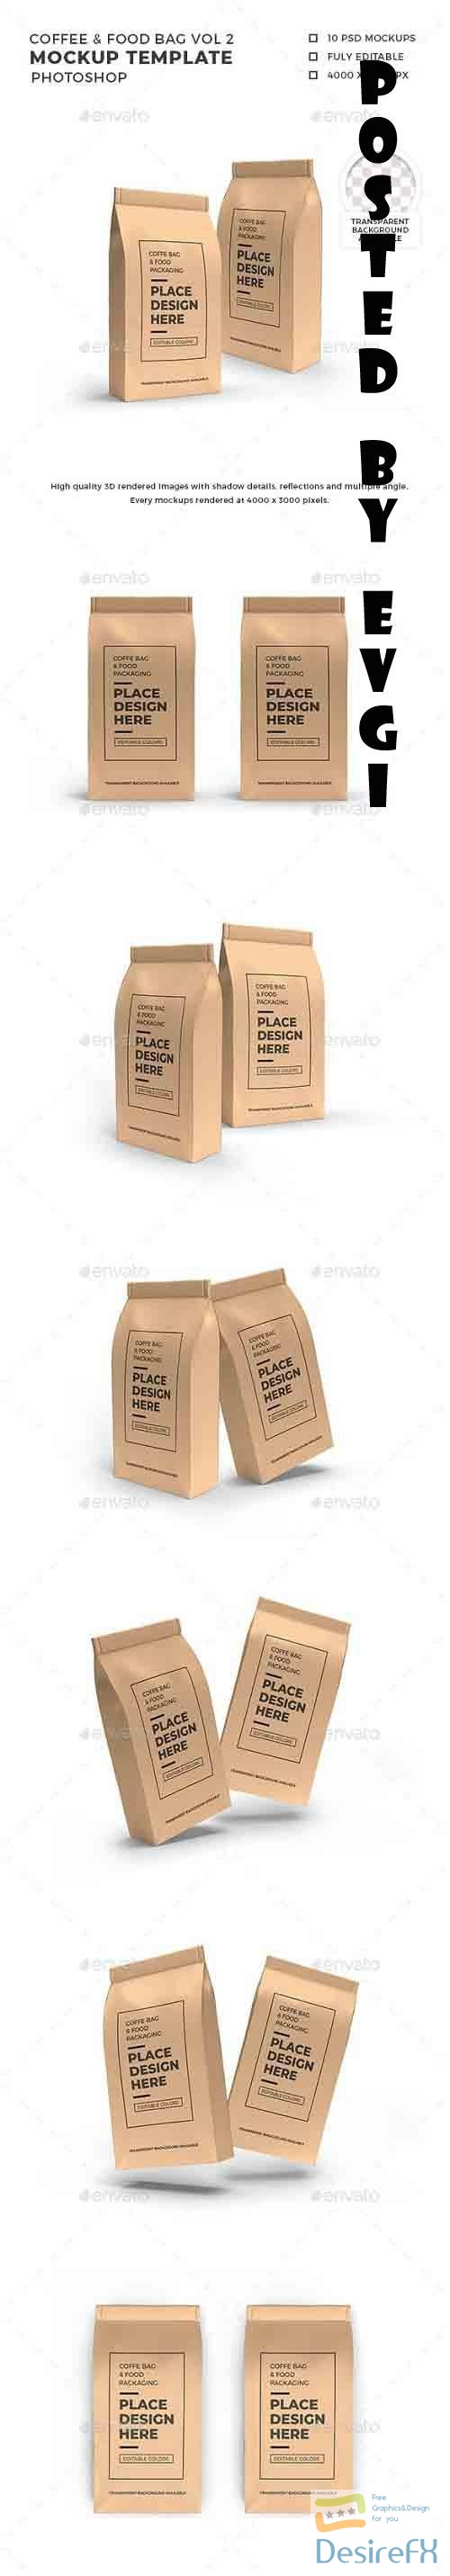 Food Paper Bag Packaging Mockup Template Vol 2 - 32513021